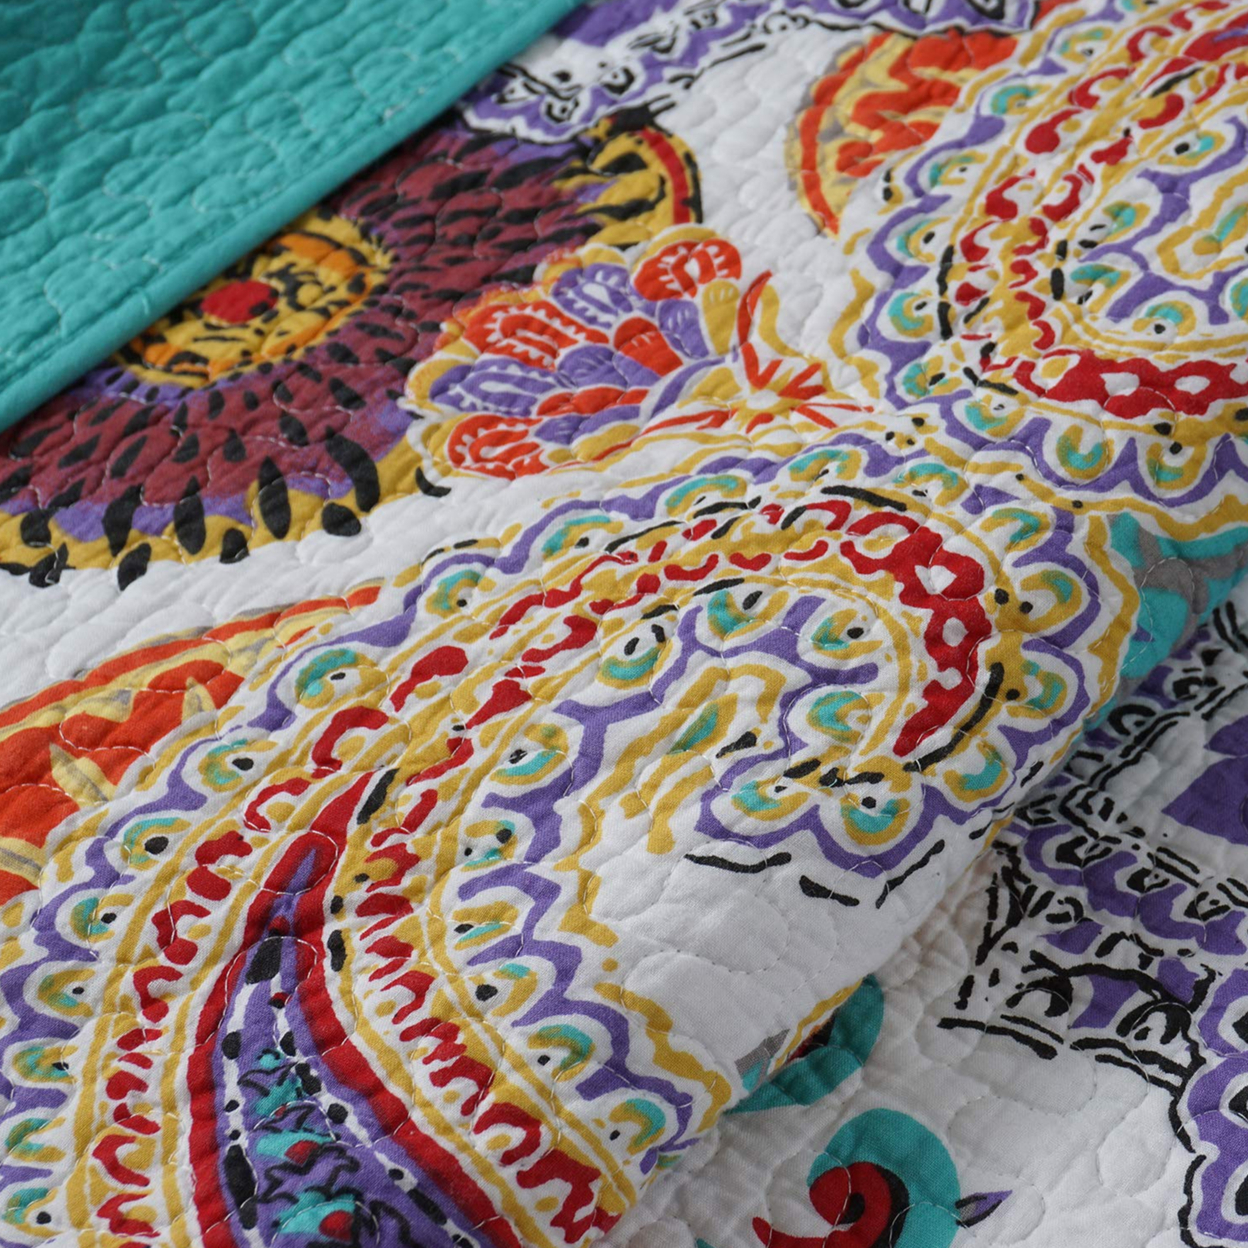 3 Piece King Size Cotton Quilt Set With Paisley Print, Teal Blue- Saltoro Sherpi